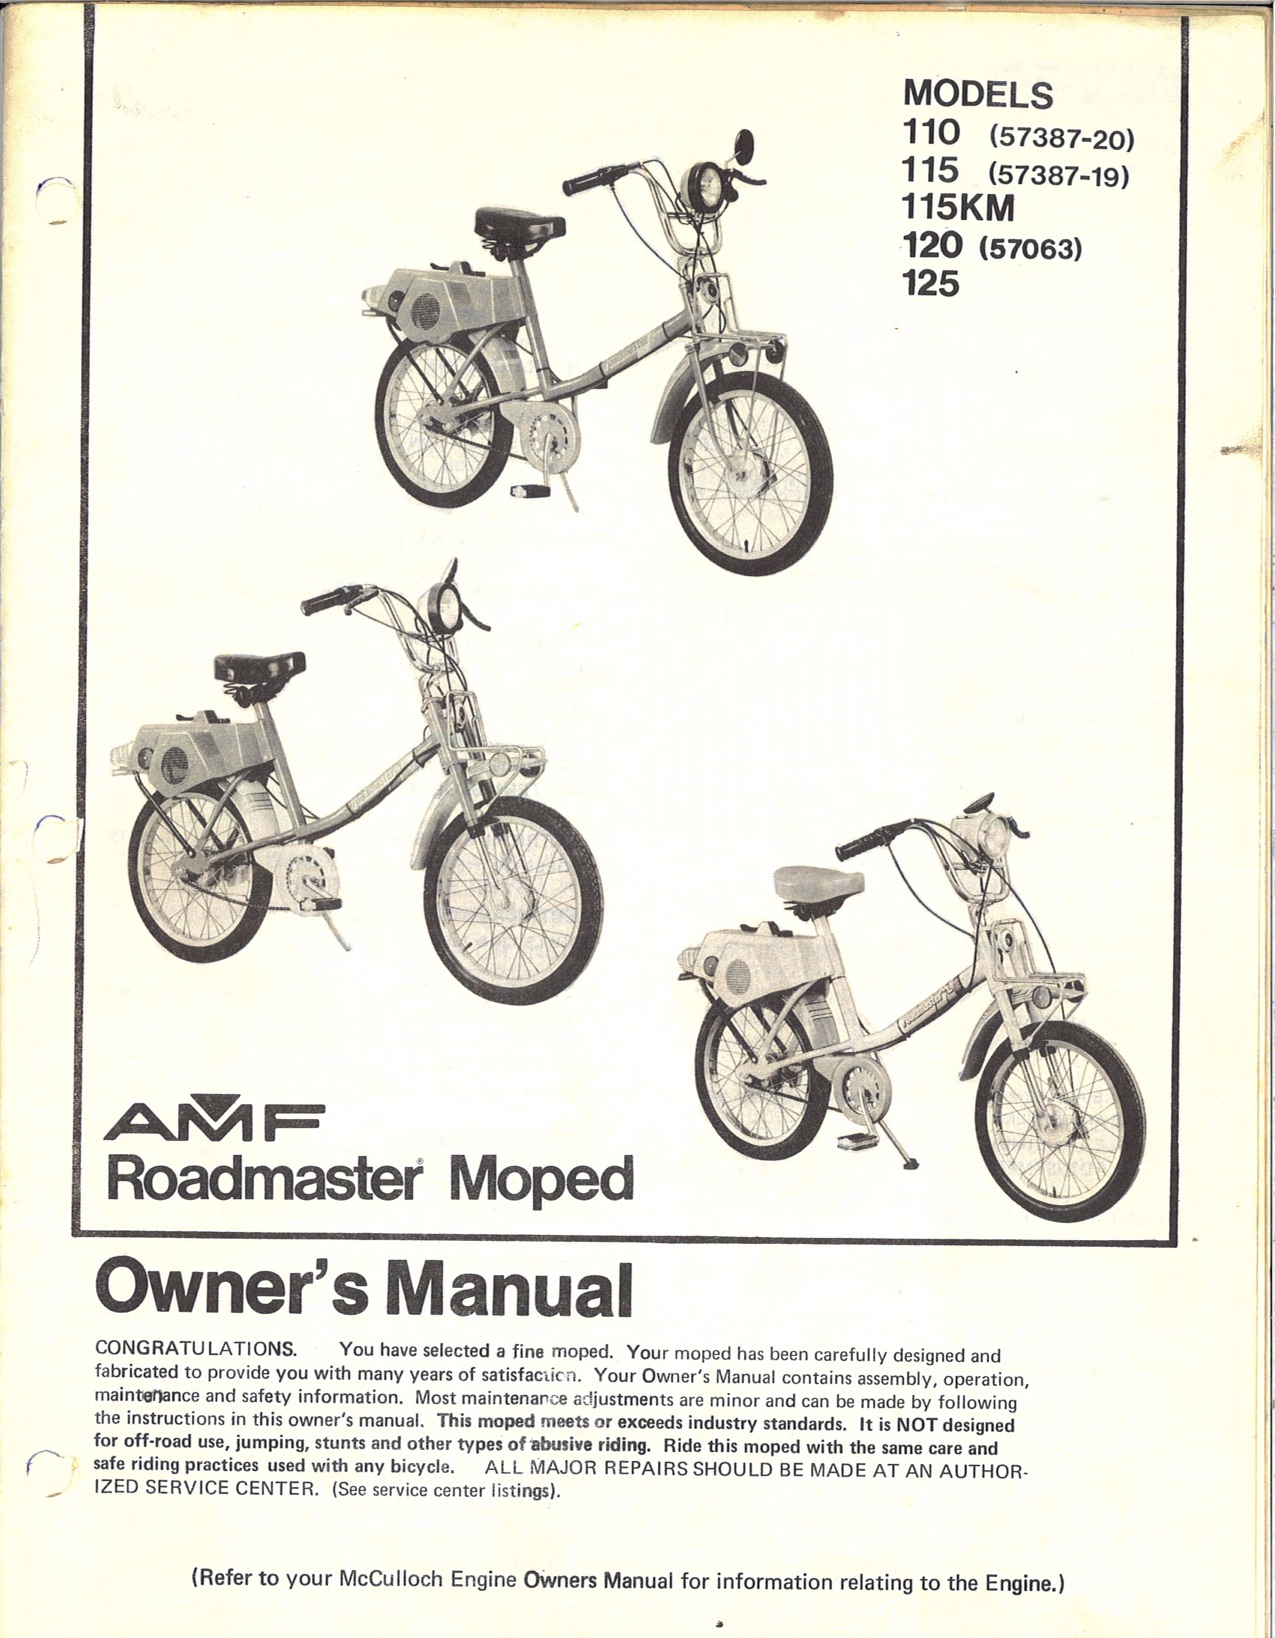 1978 Roadmaster 110-115-115KM-120-125 Moped Owner's Manual